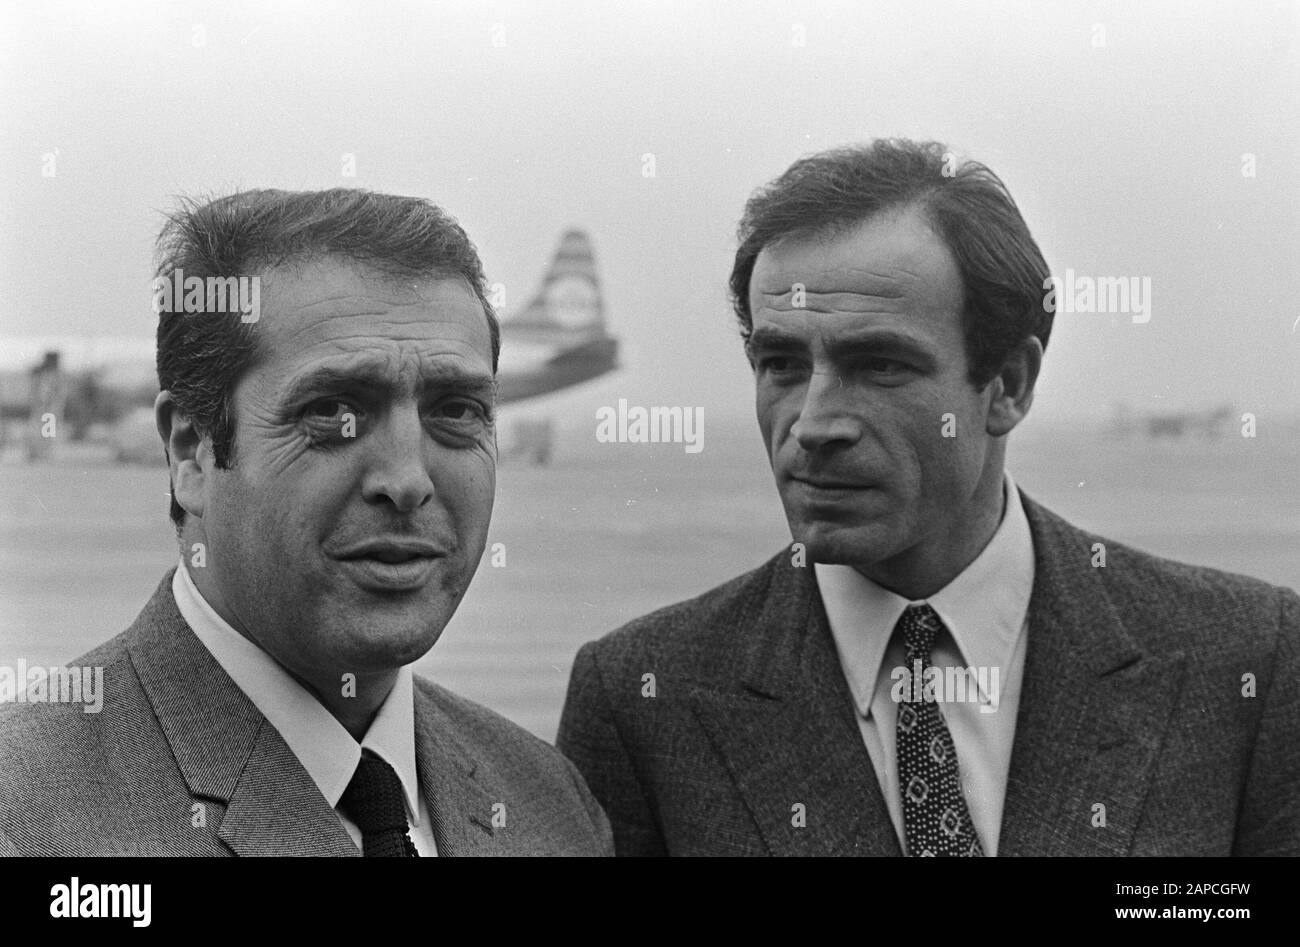 Arrival director George Lautner (left) and Venantino Venantini (film star) at Schiphol Date: 2 February 1966 Location: Noord-Holland, Schiphol Keywords: FILM STAR, Directors, arrivals Stock Photo